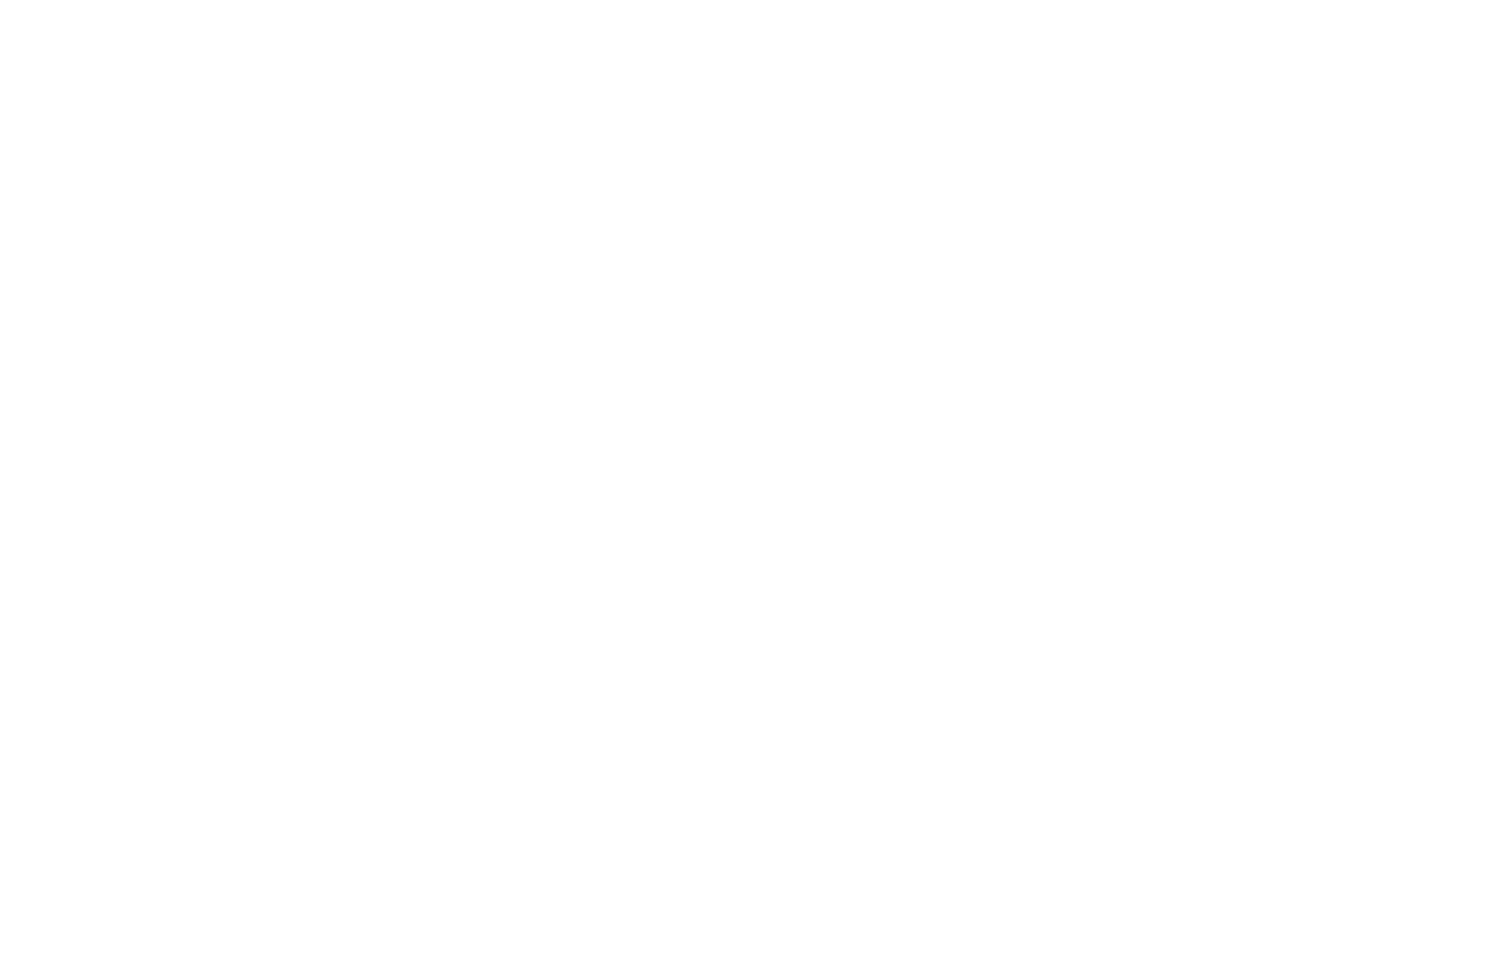 Riverlands Brewing Company